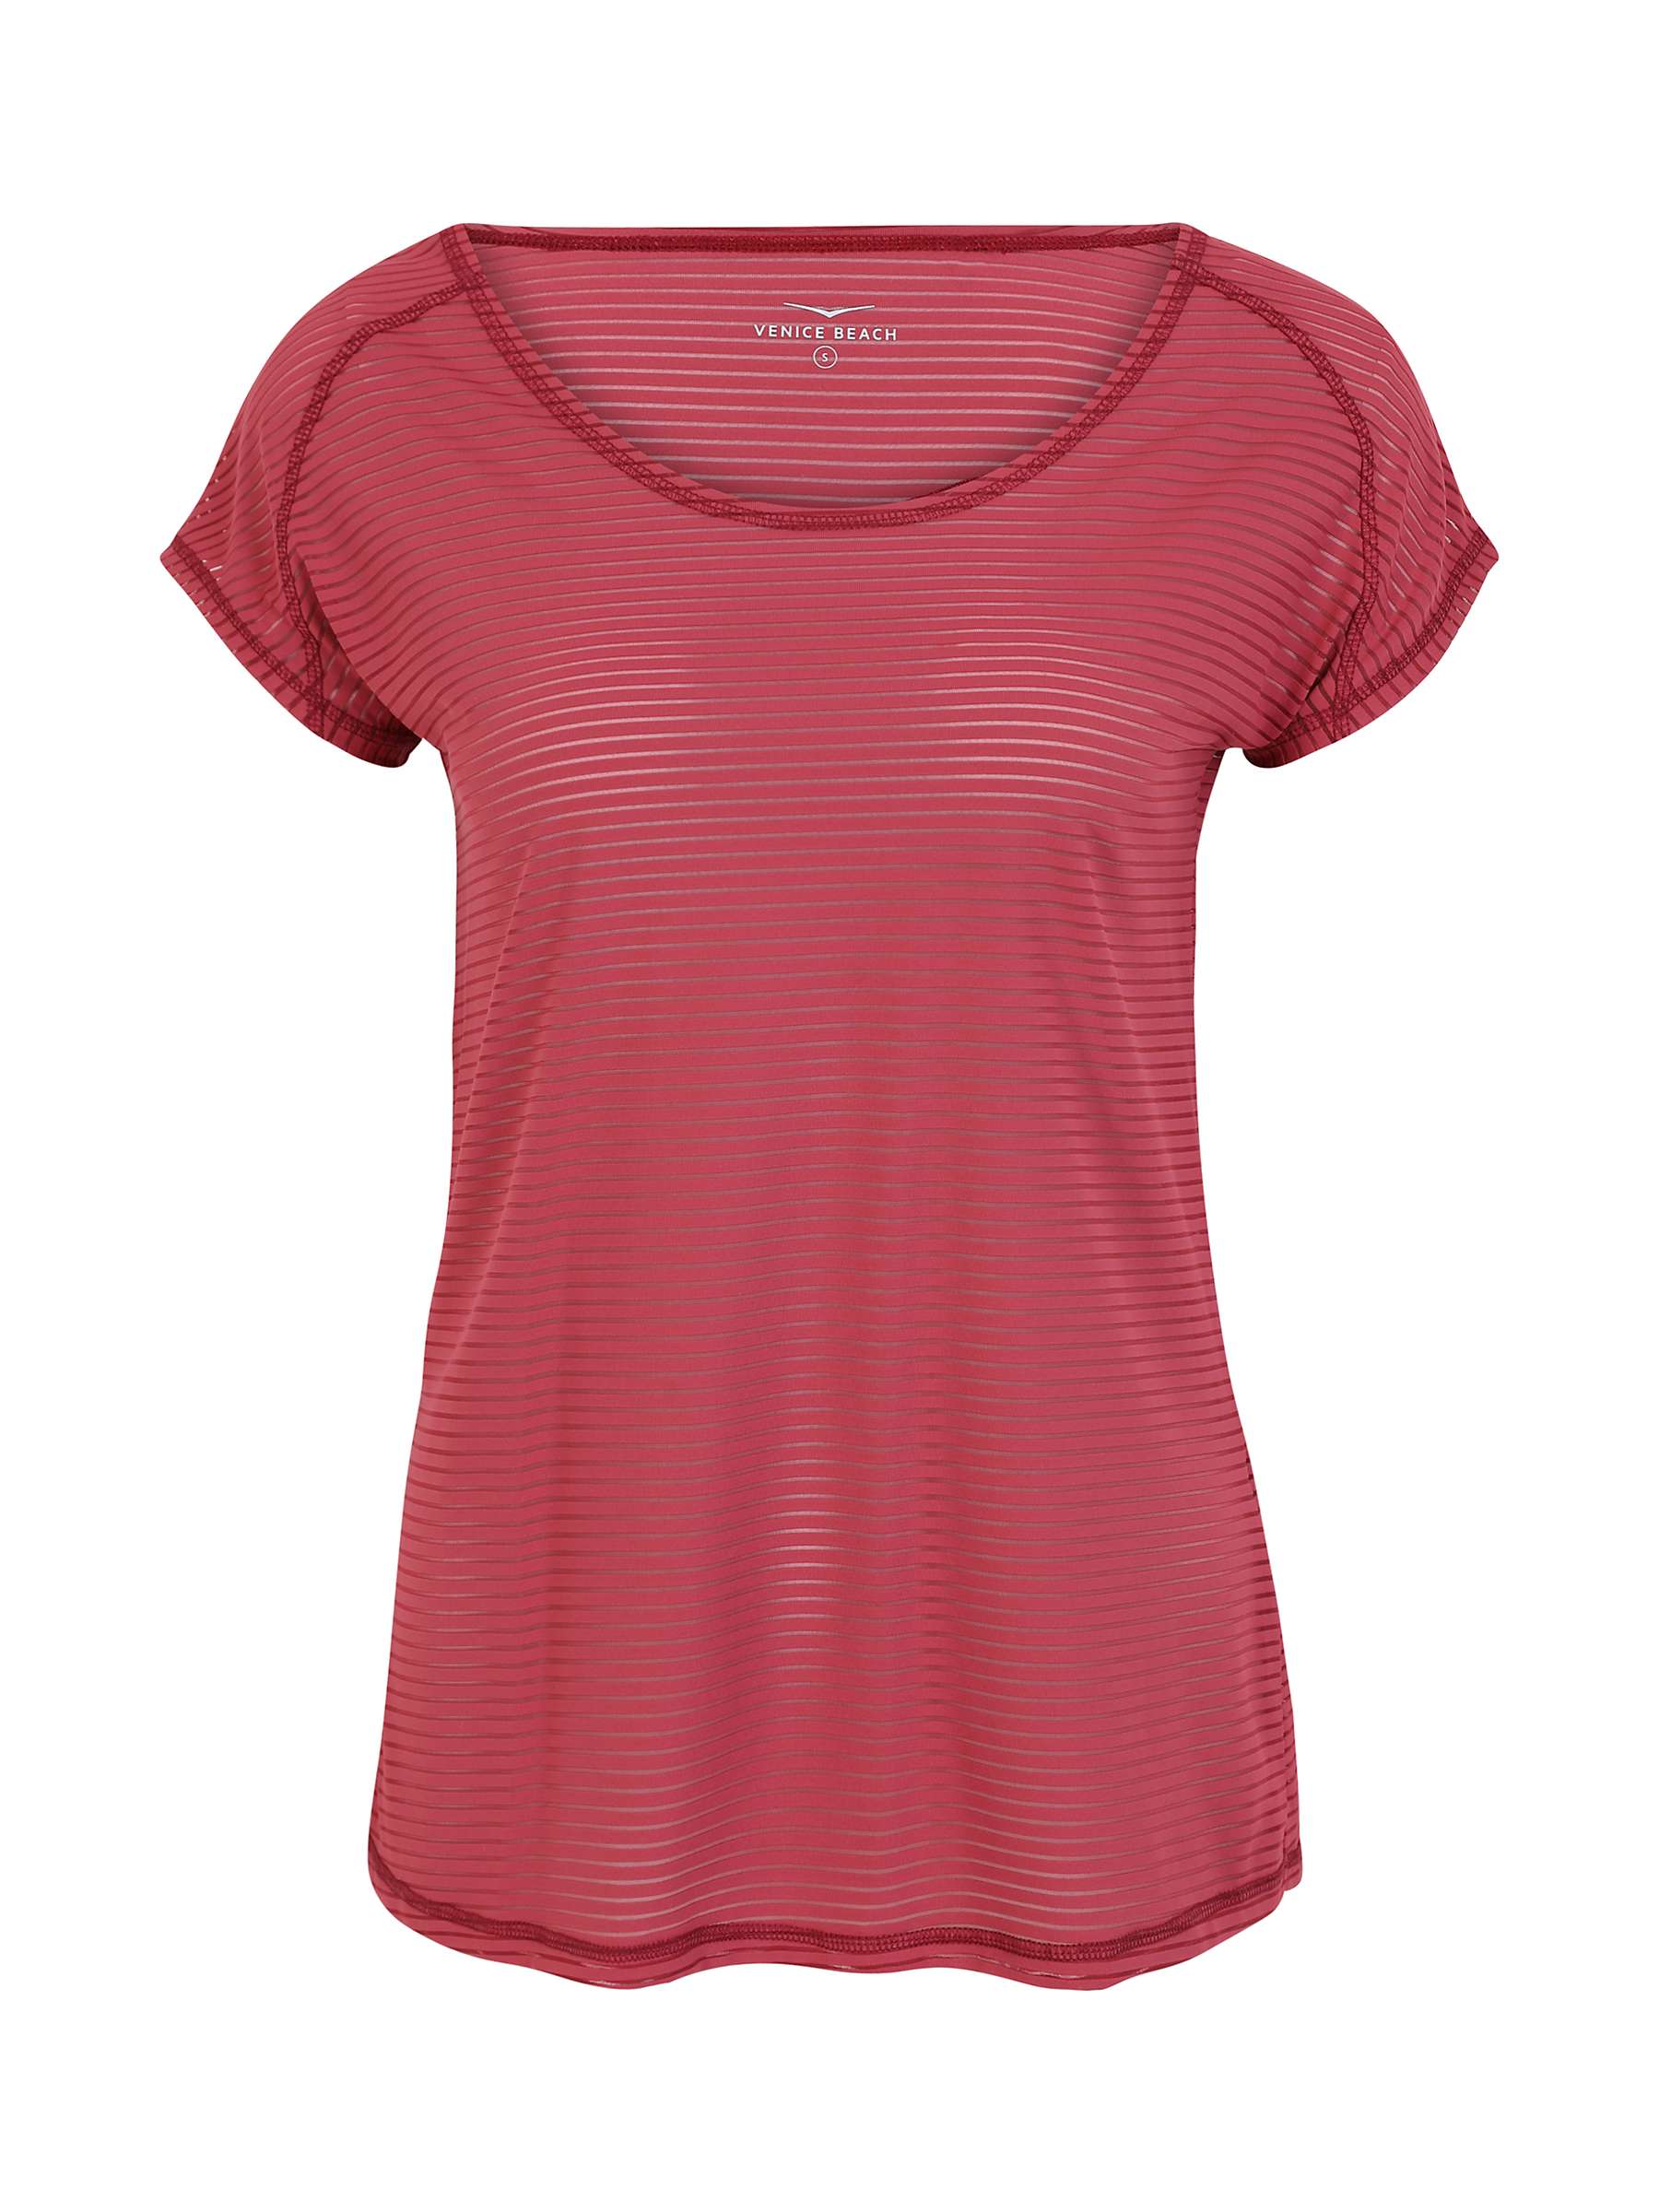 Buy Venice Beach Damaris Short Sleeve Gym Top, Deep Red Online at johnlewis.com